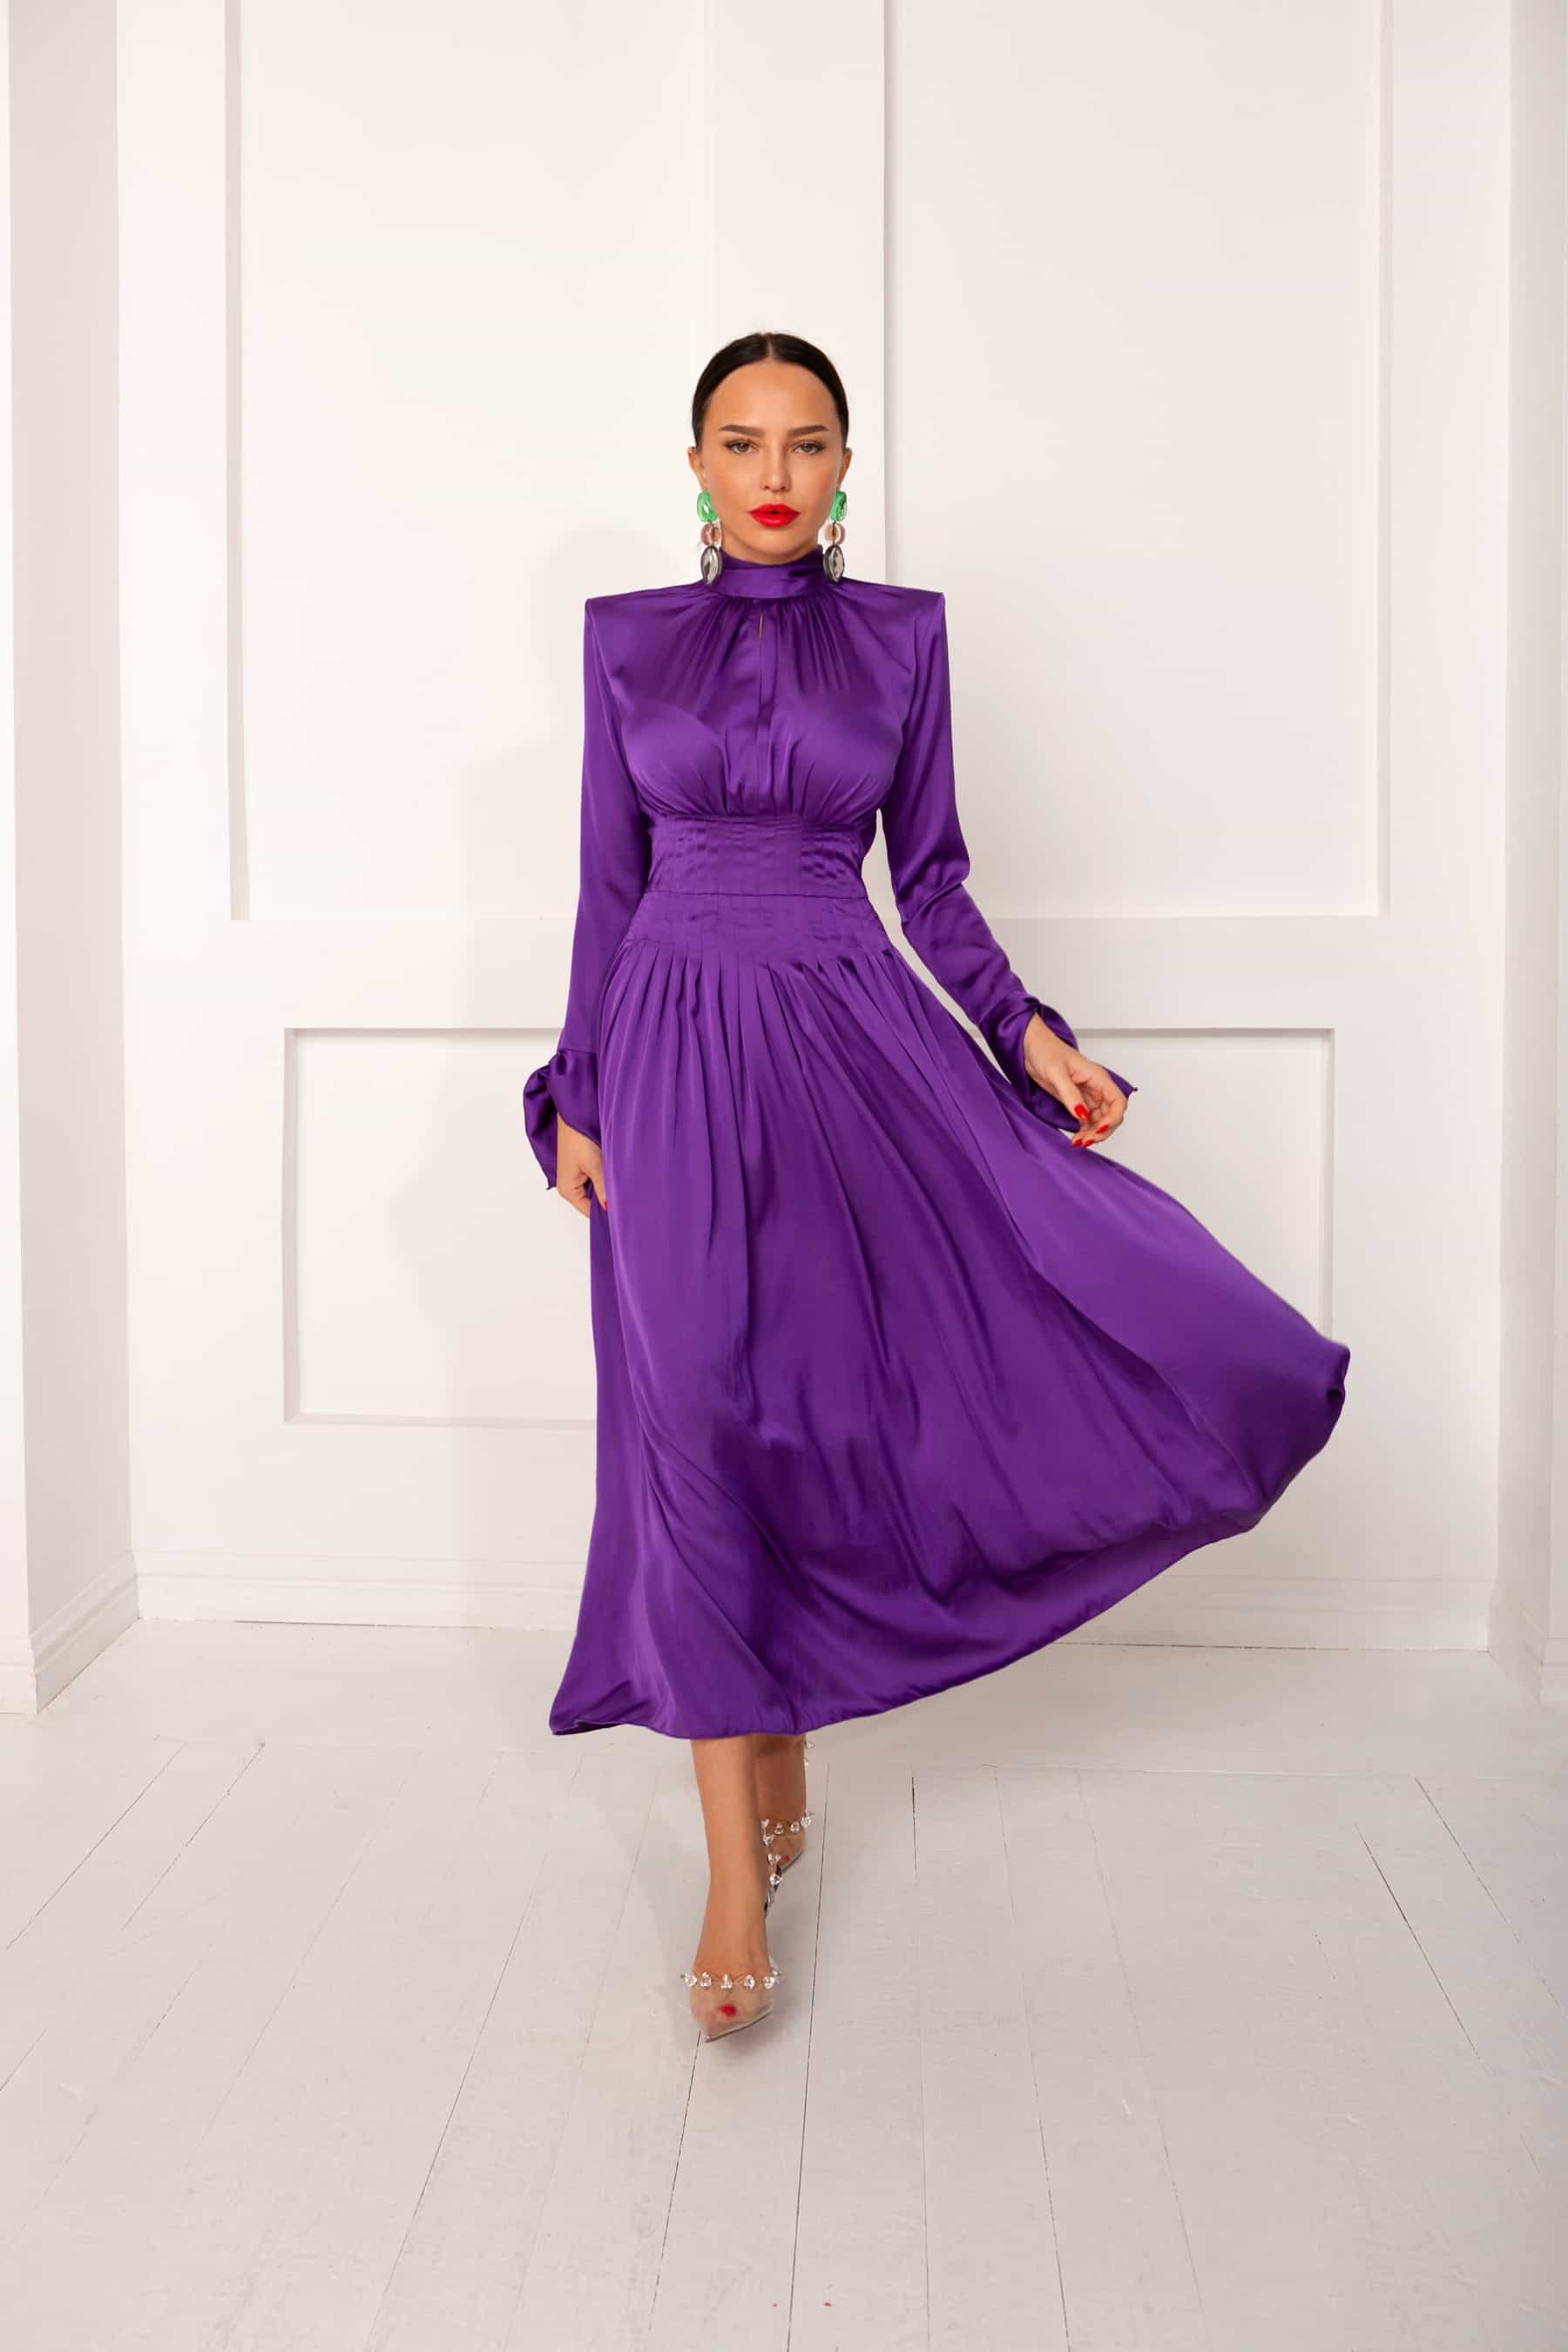 Violet cloth with seams, draping at the waist and ruffled sleeves